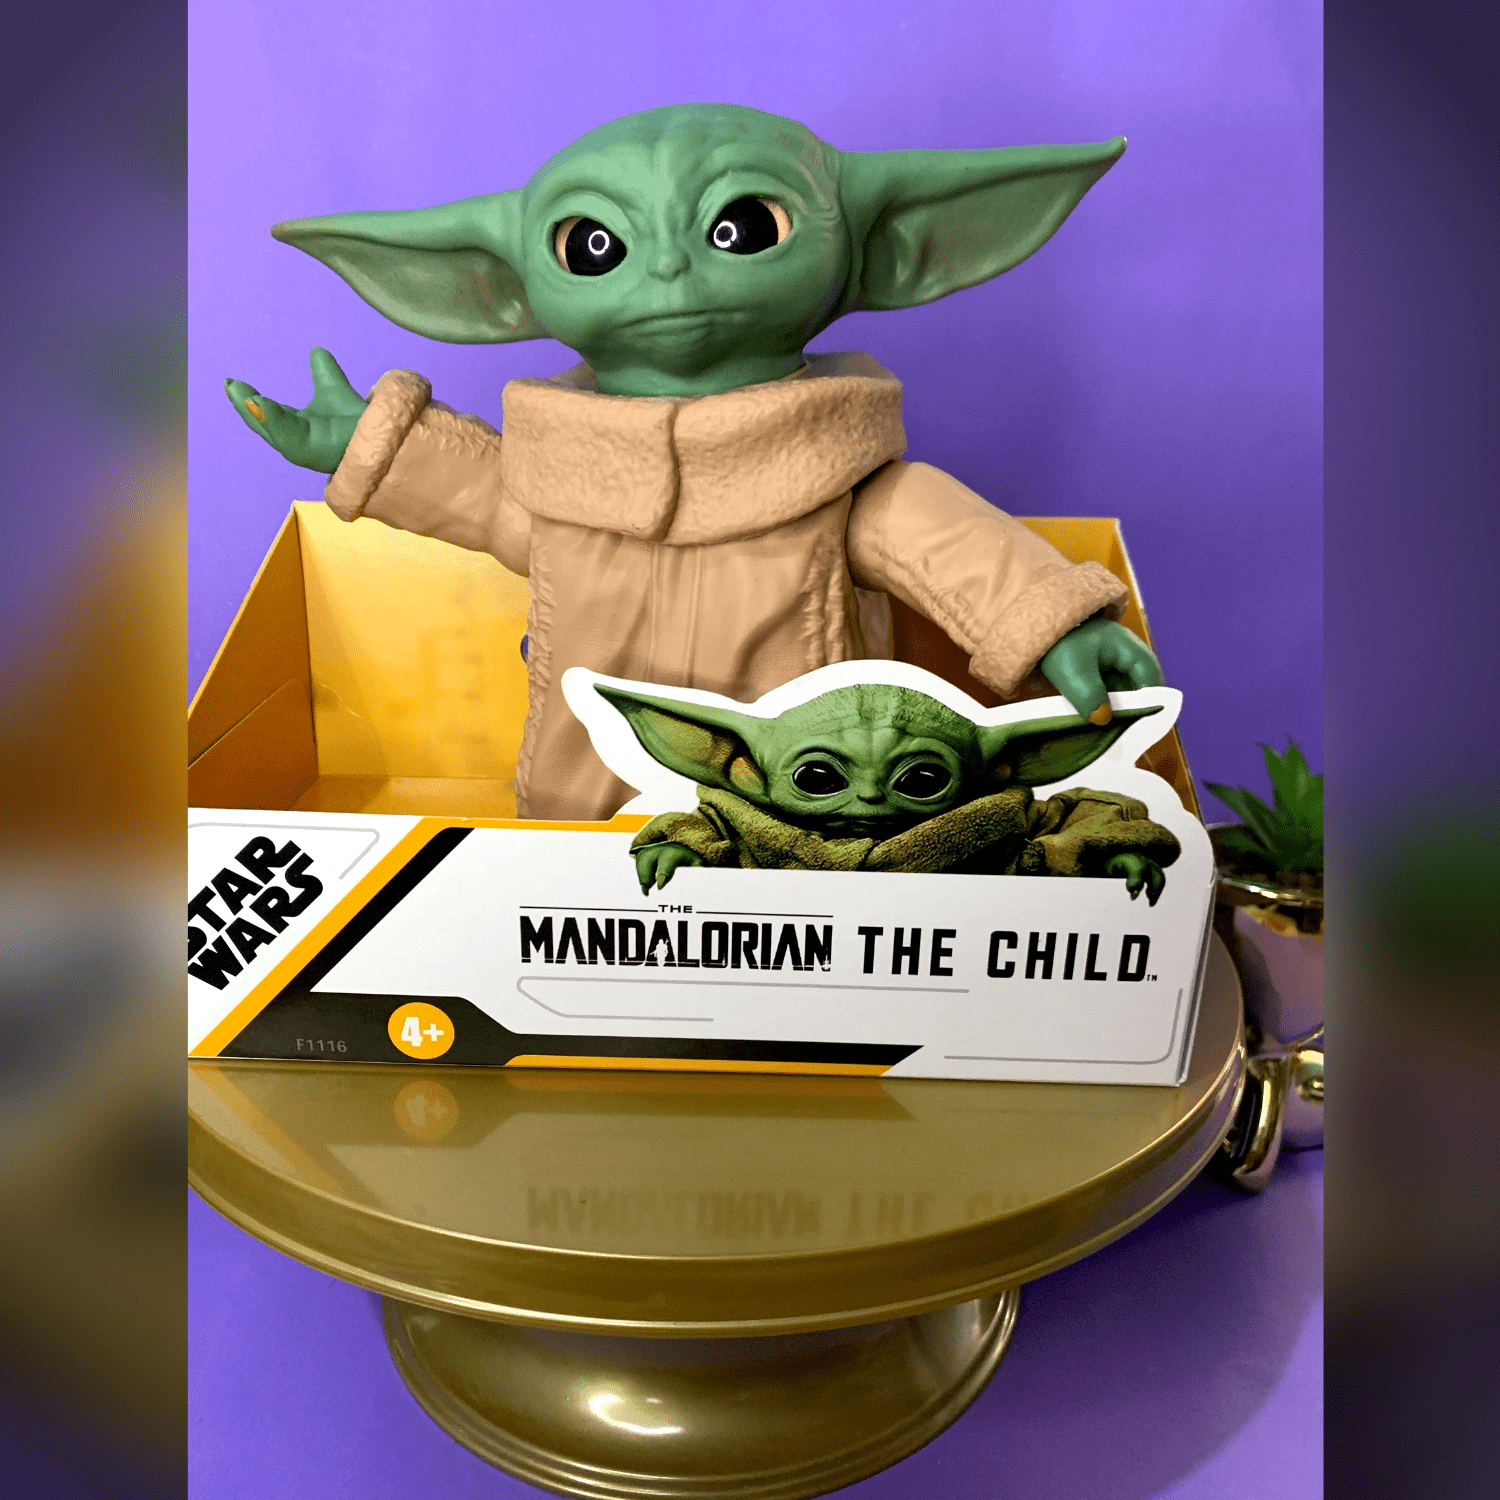 Placa Metálica M Star Wars Yoda – Nerd ao Cubo